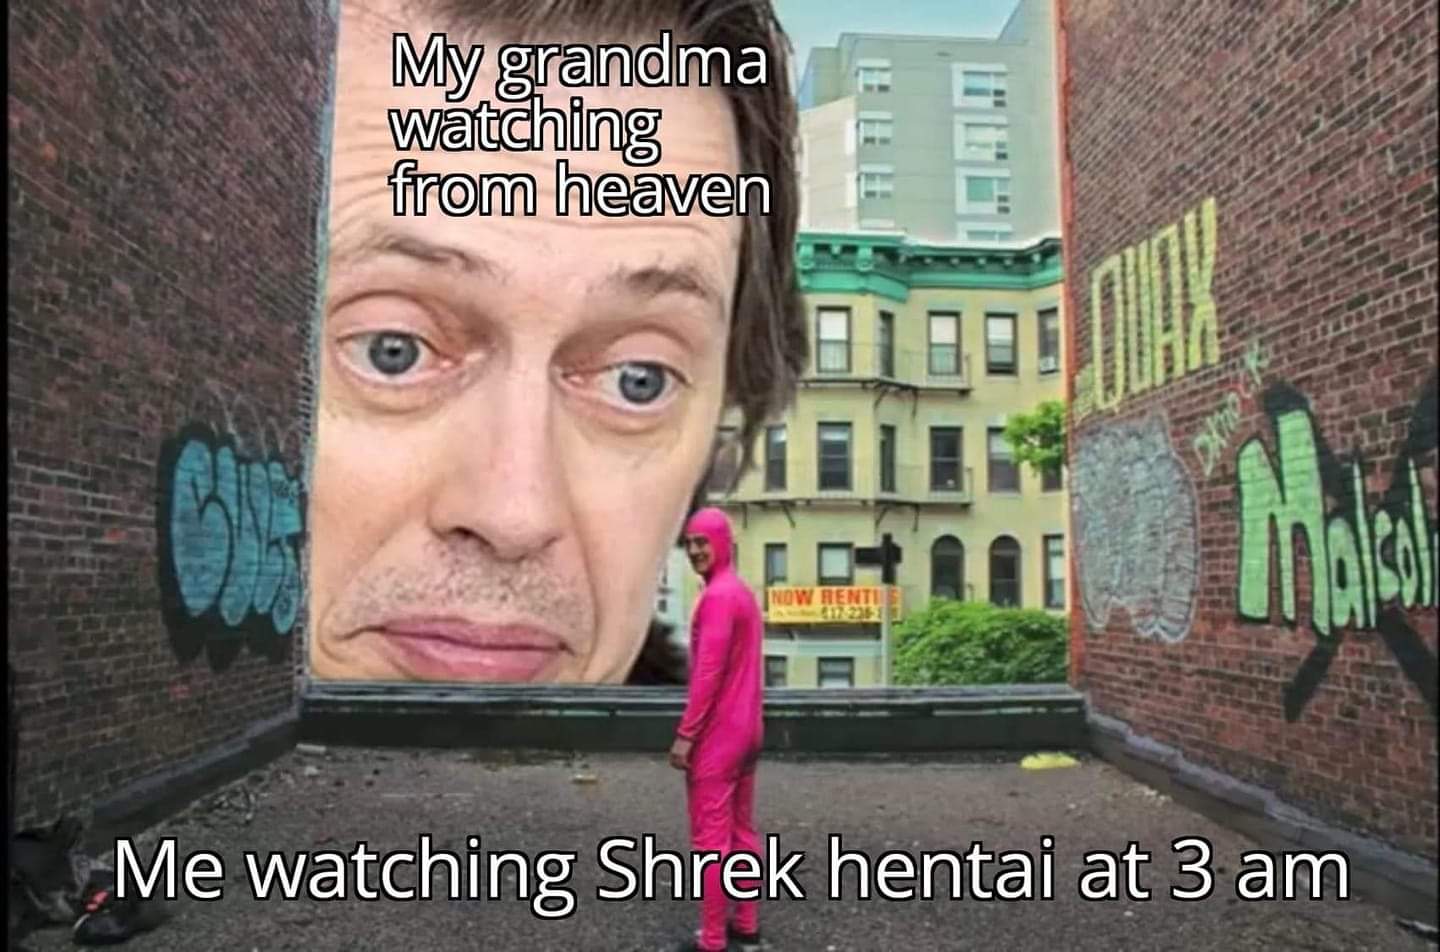 pink guy photoshop original - My grandma watching from heaven Bijos Hk Mais Now Renti Me watching Shrek hentai at 3 am